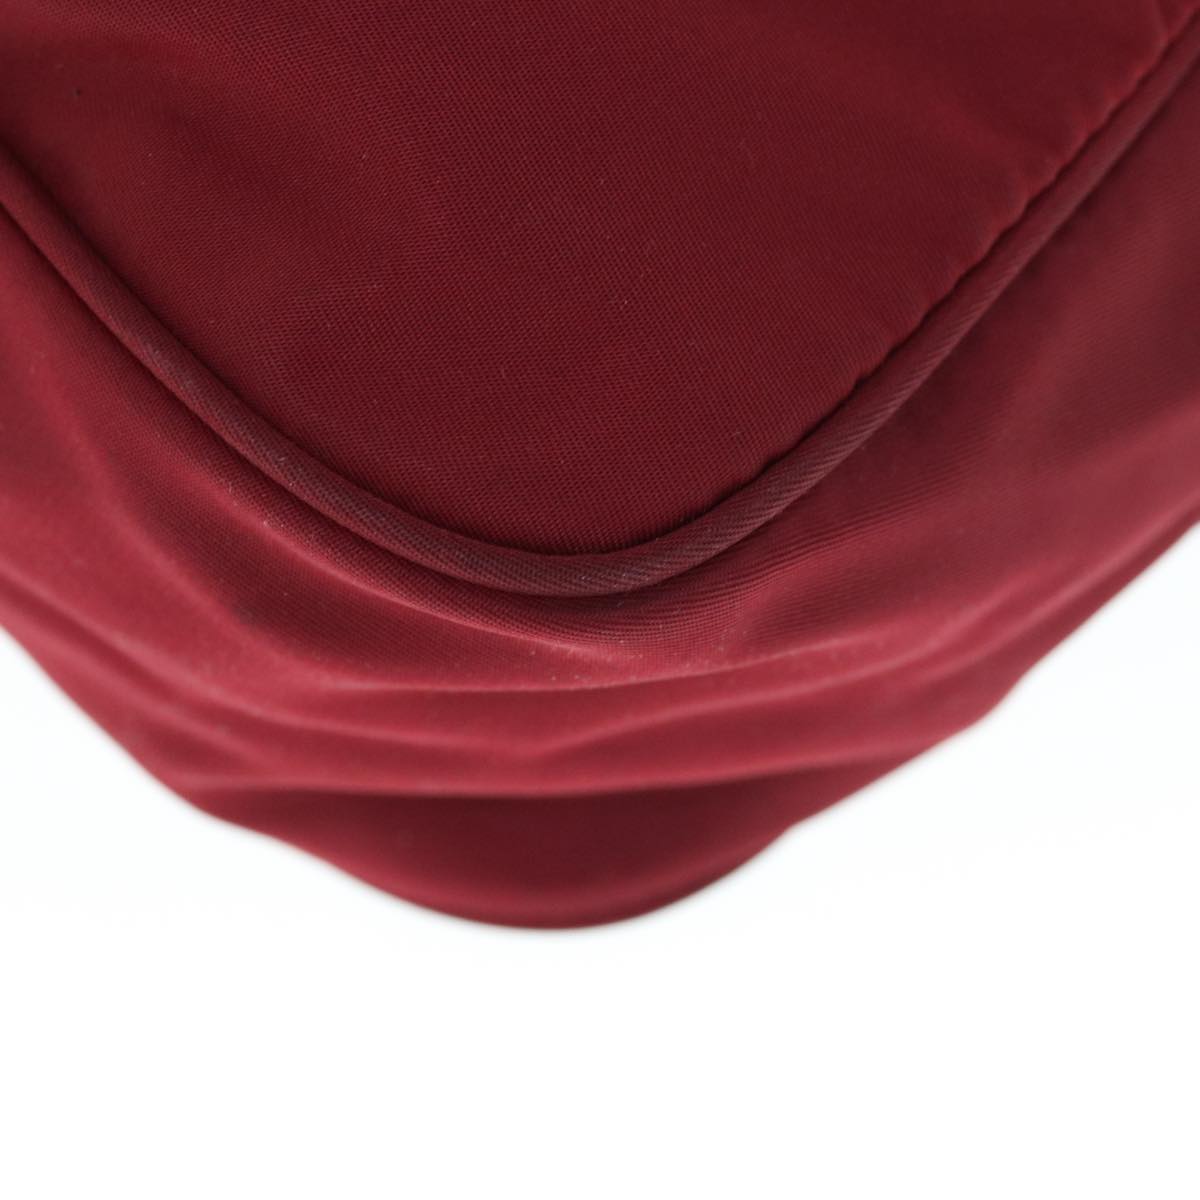 PRADA Shoulder Bag Nylon Red Auth 63181